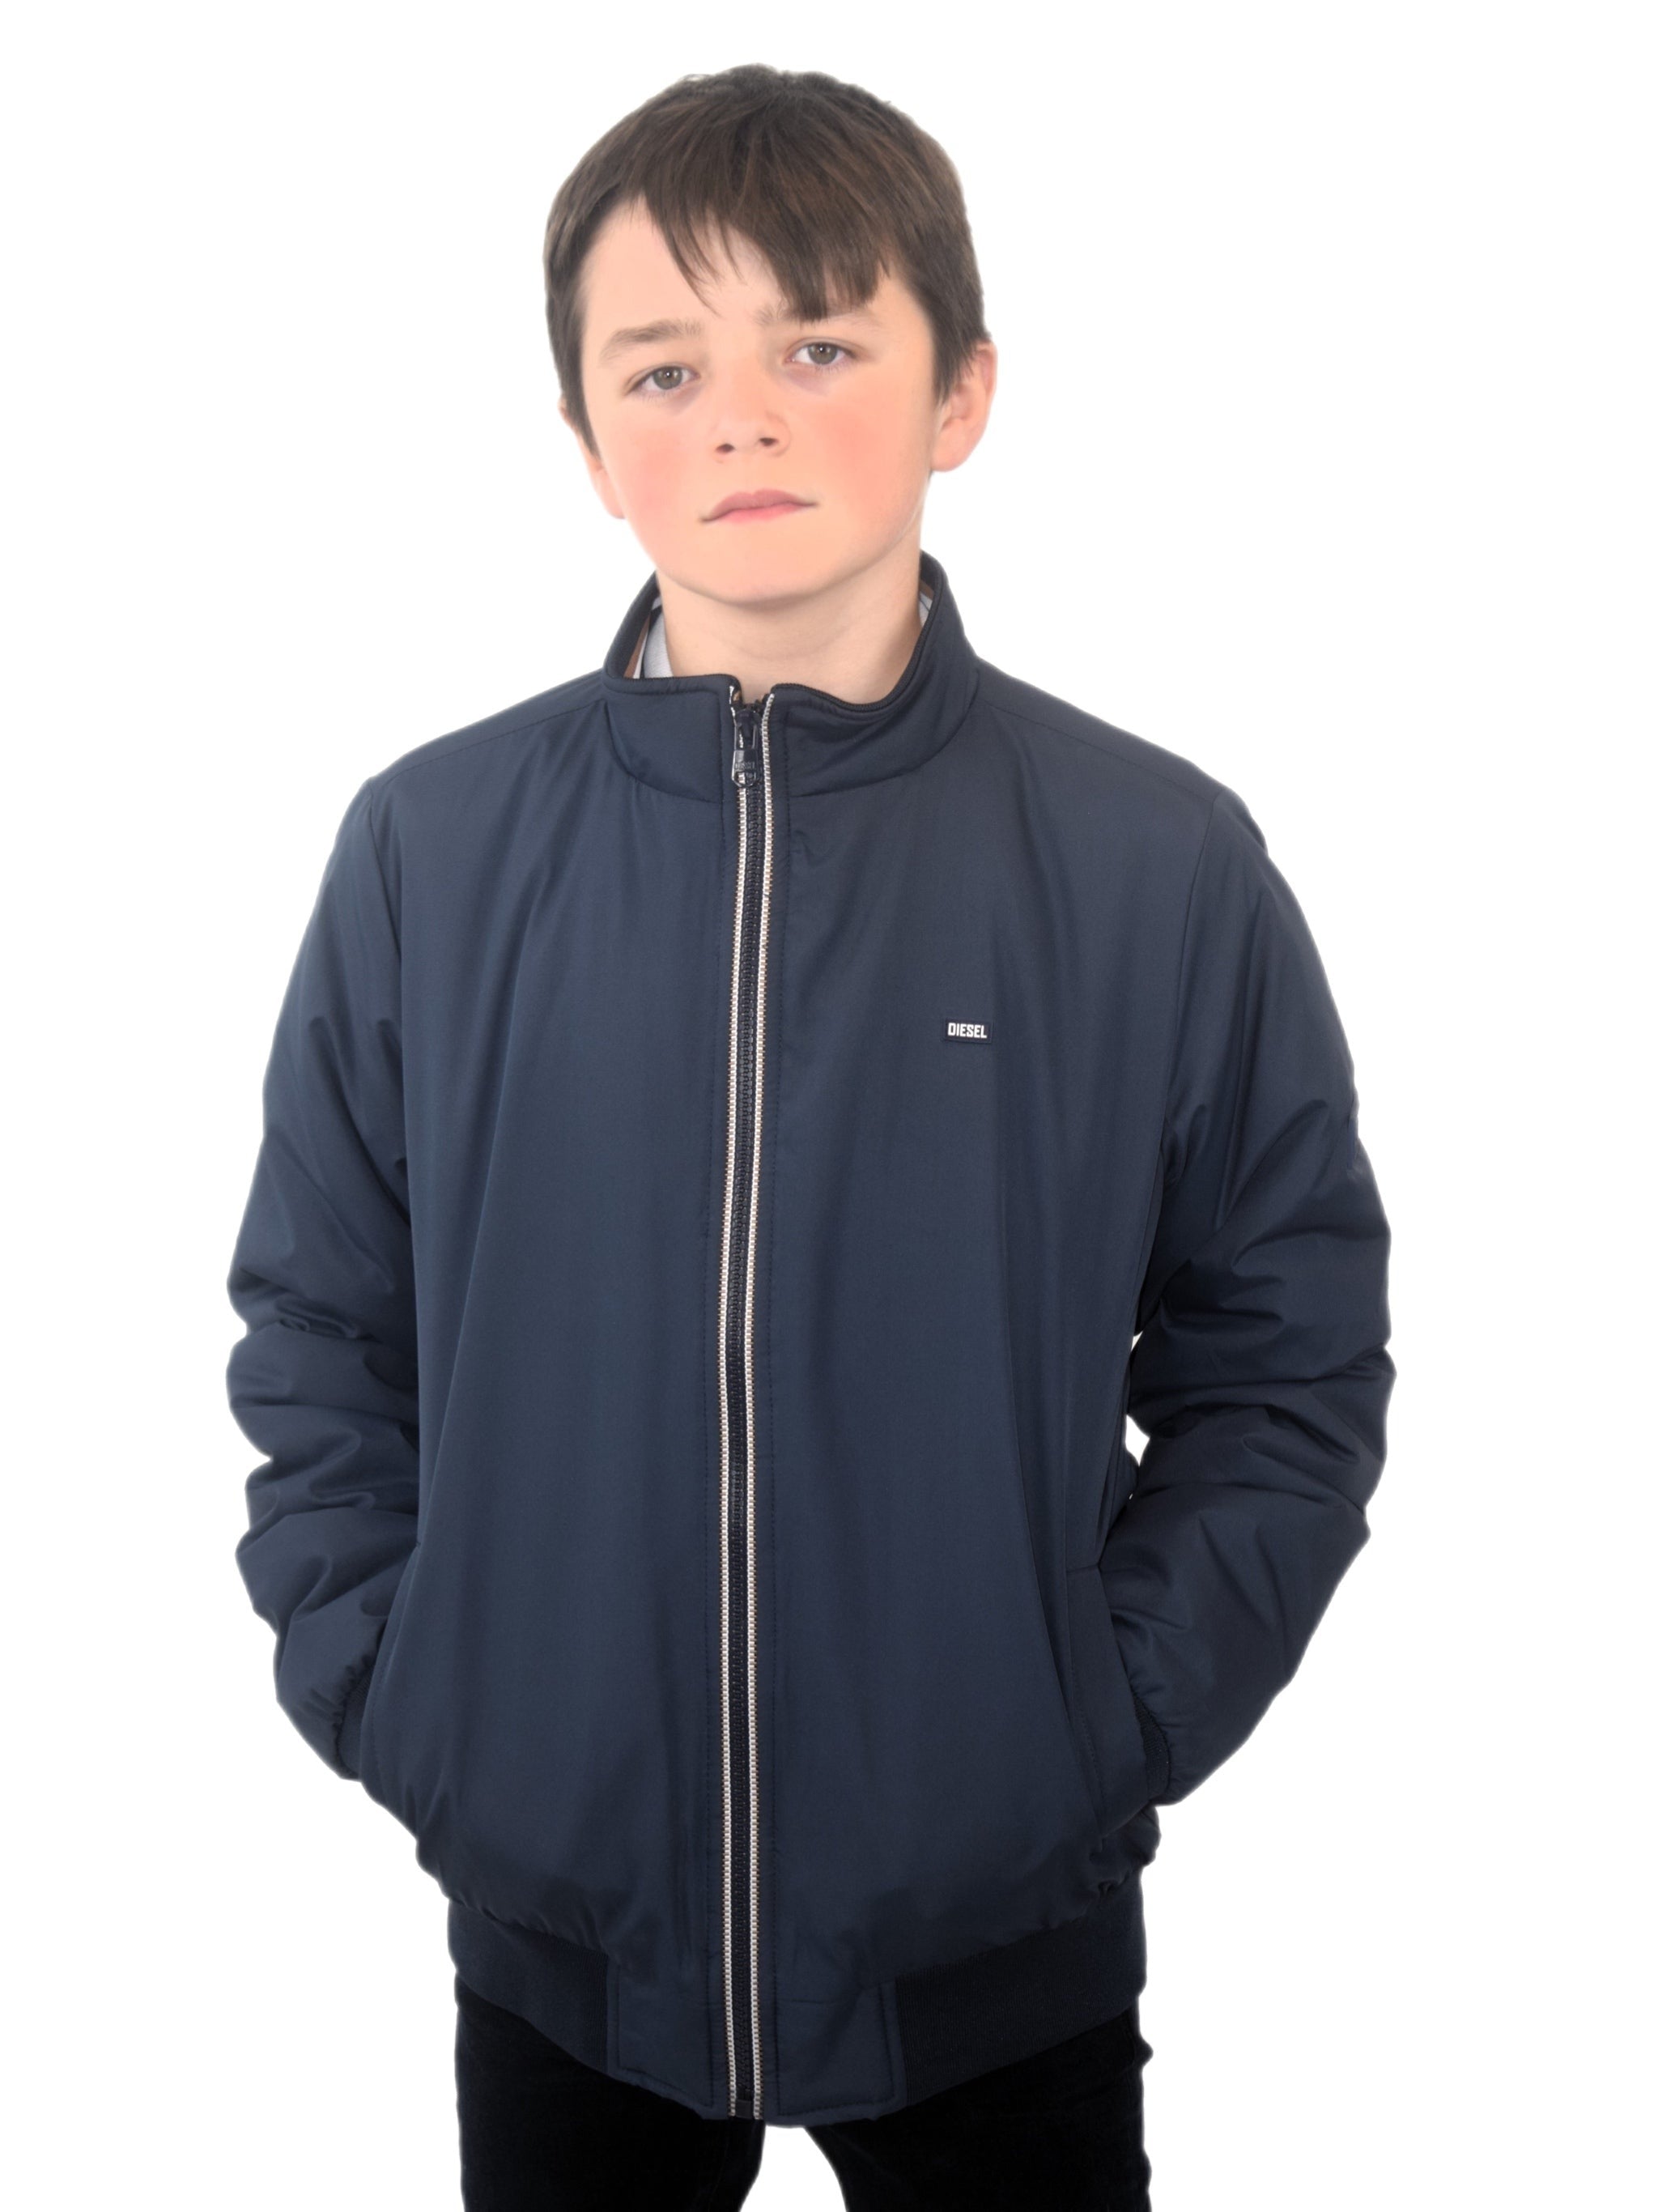 Noel Navy Boys Jacket